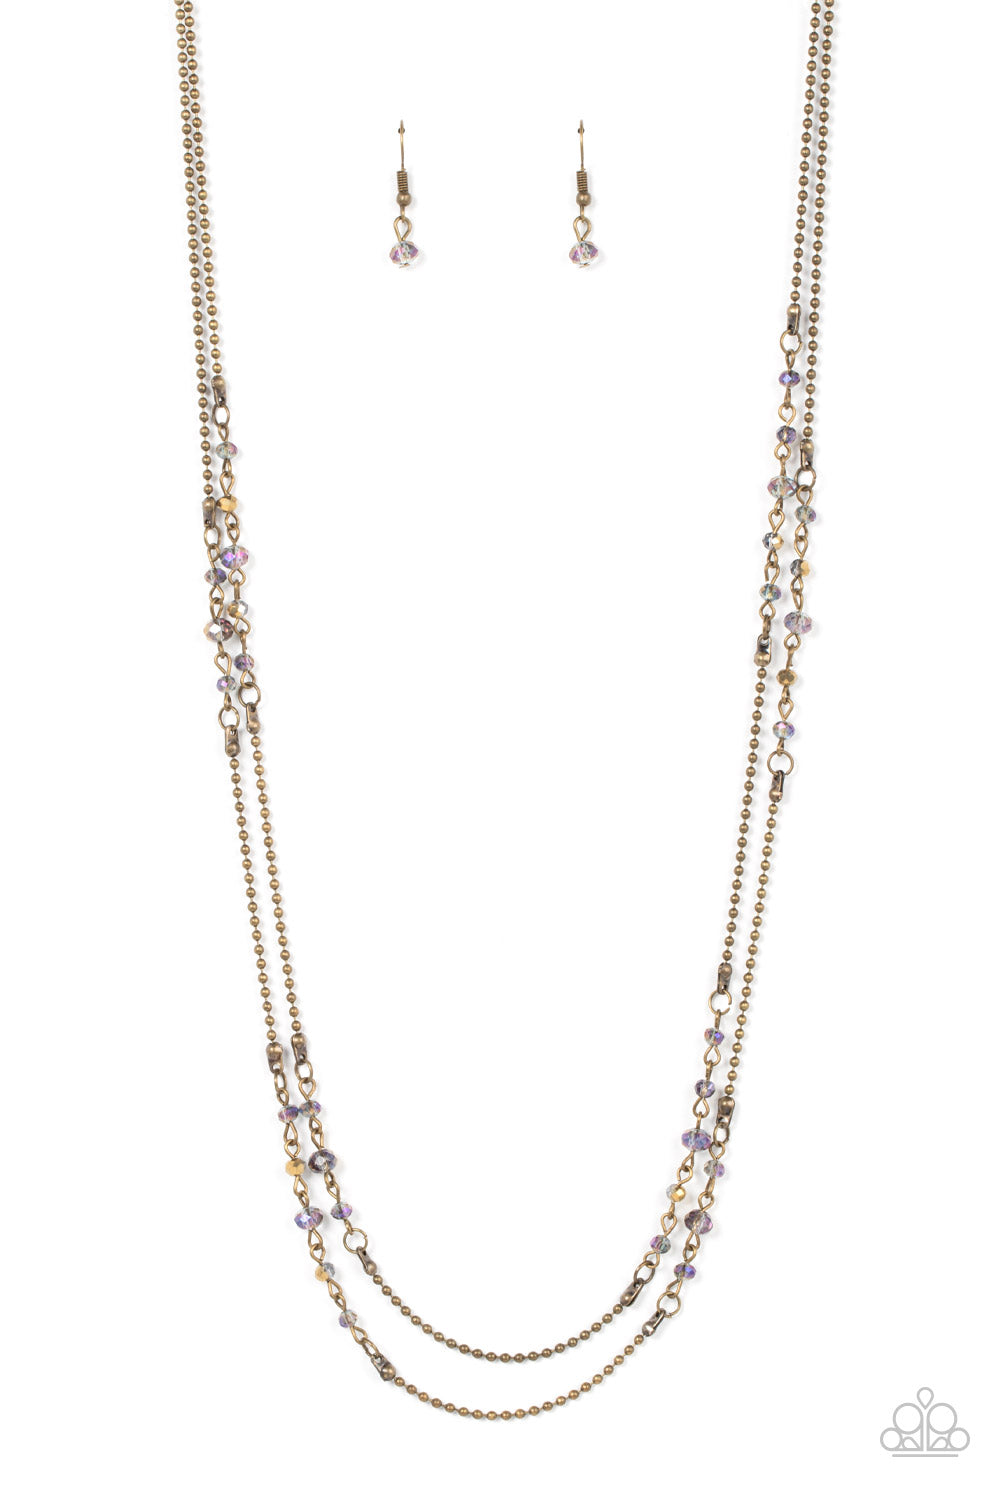 Petitely Prismatic - Brass Iridescent Beads - Paparazzi Accessories